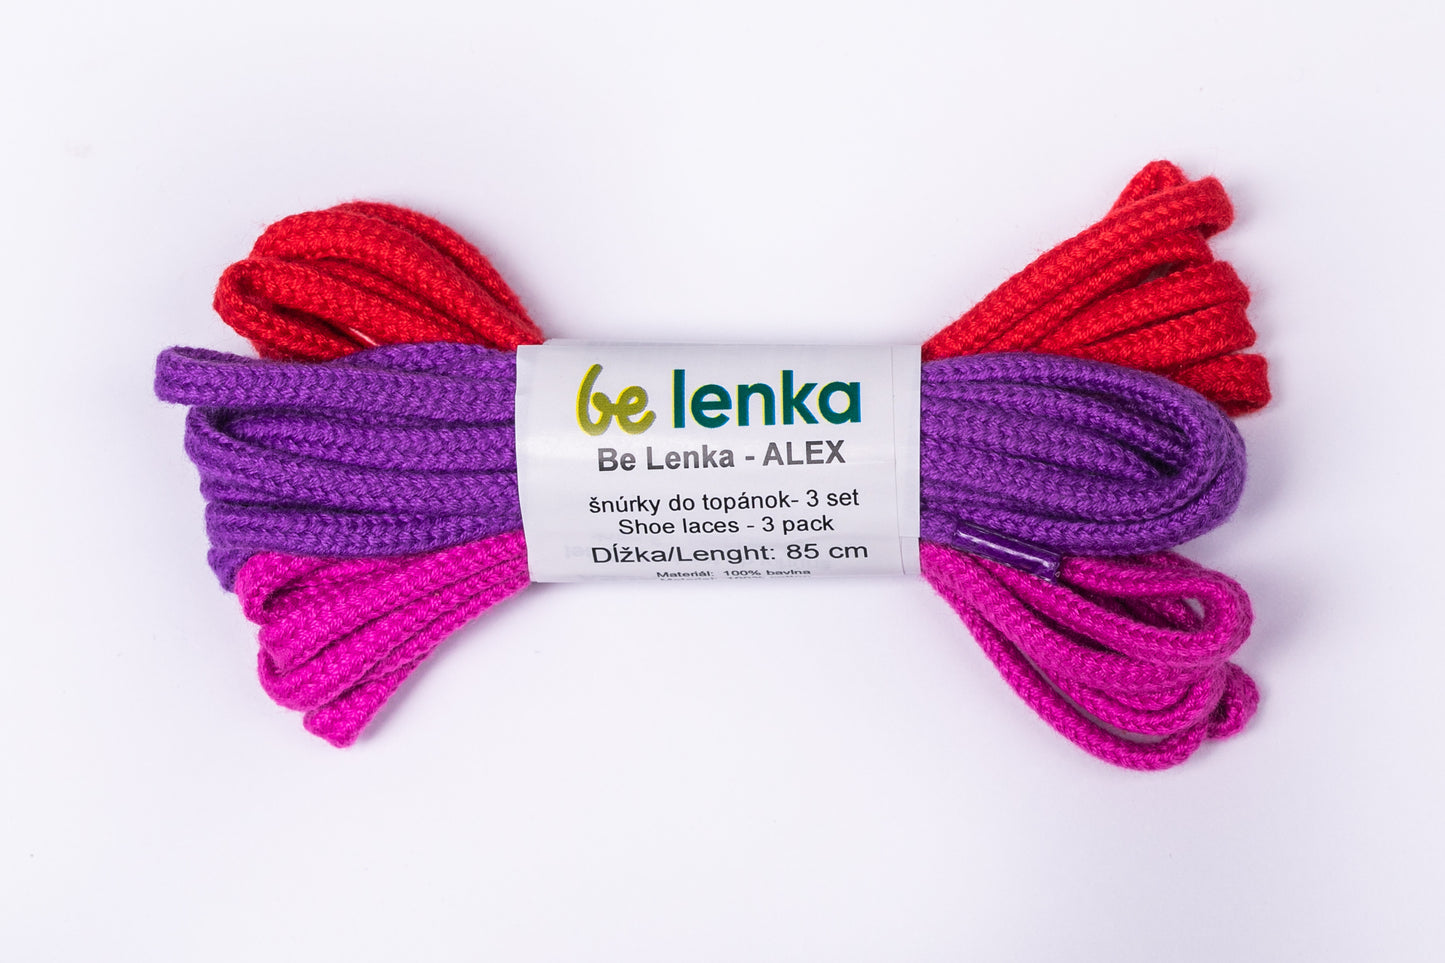 Be Lenka Shoe Laces 3 pack (85cm) - Red, Fuchsia, Purple